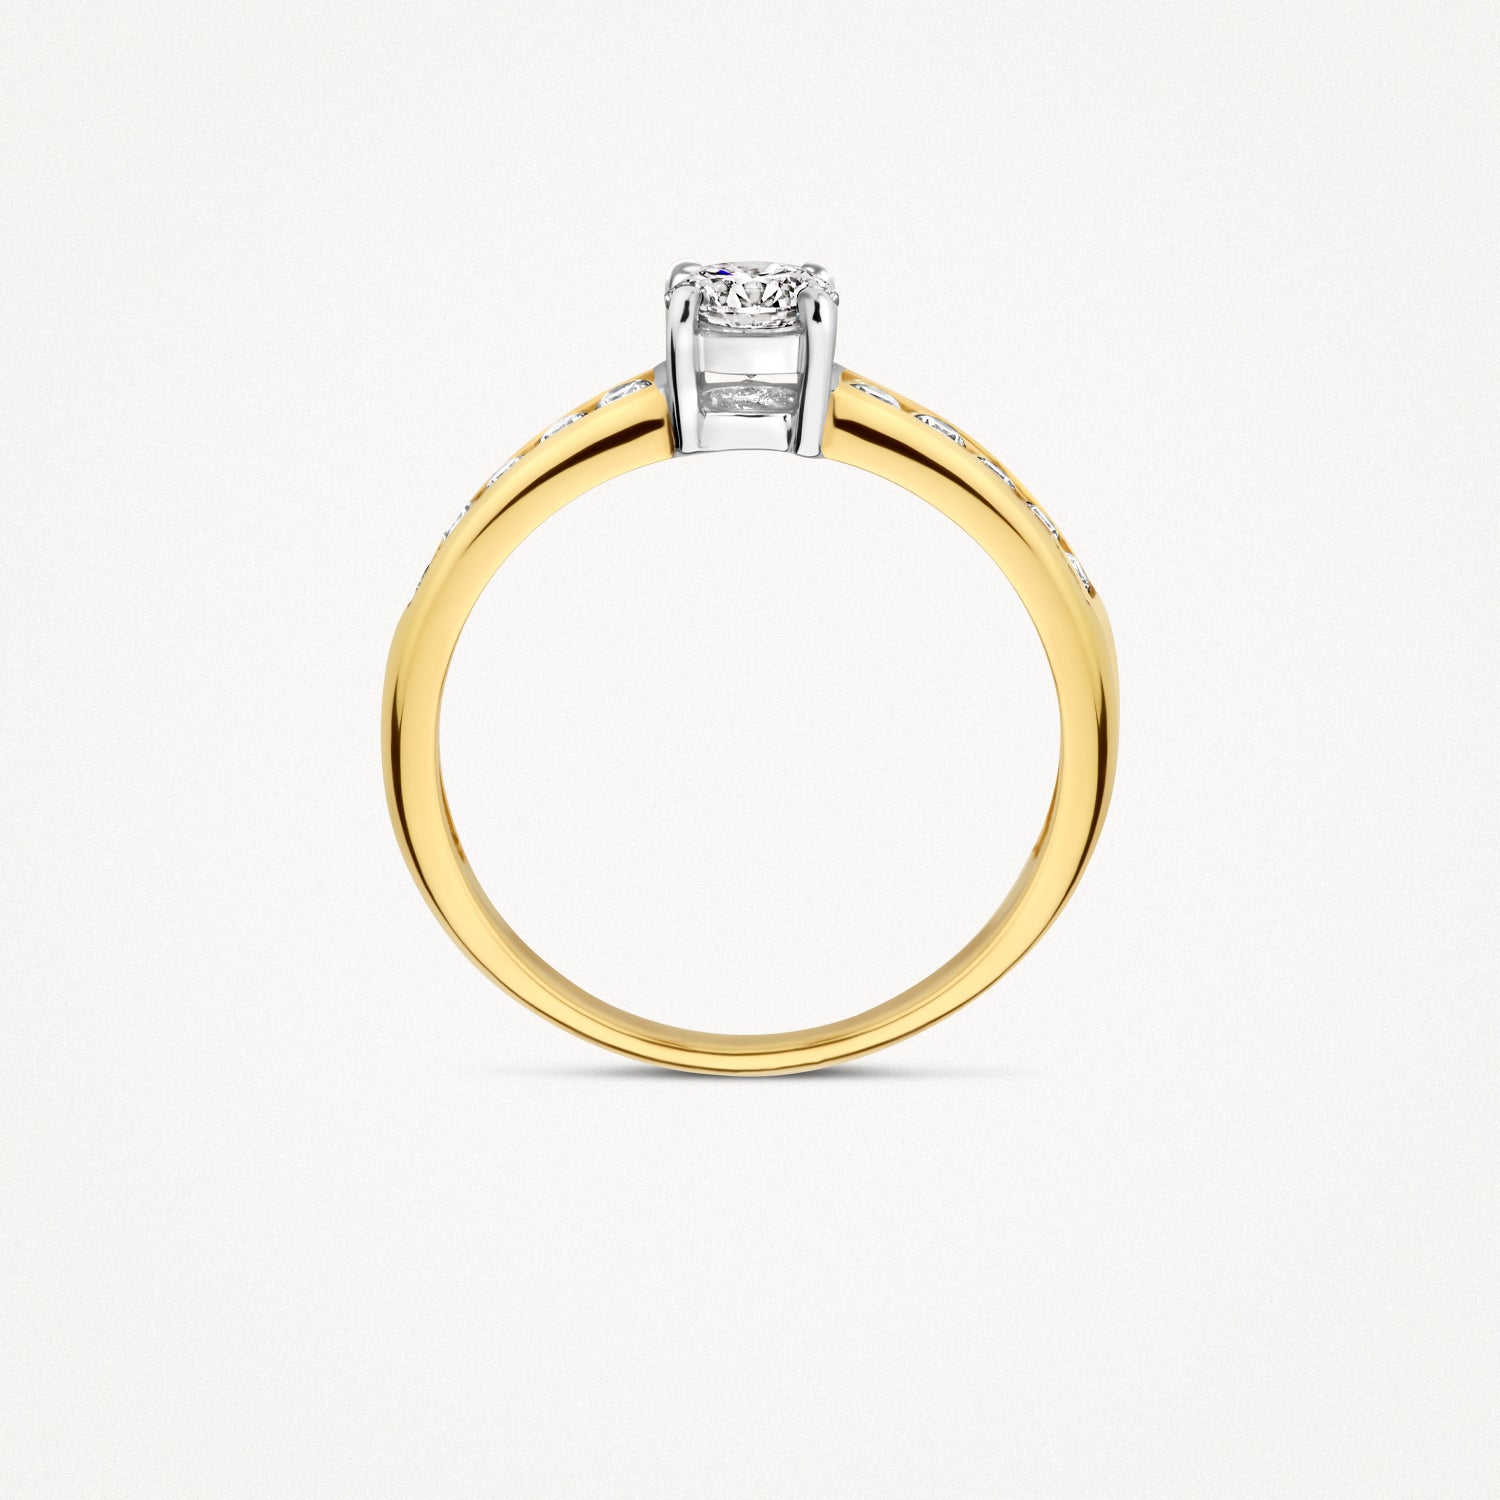 Ring 1154BZI - 14k Gold and White Gold with Zirconia